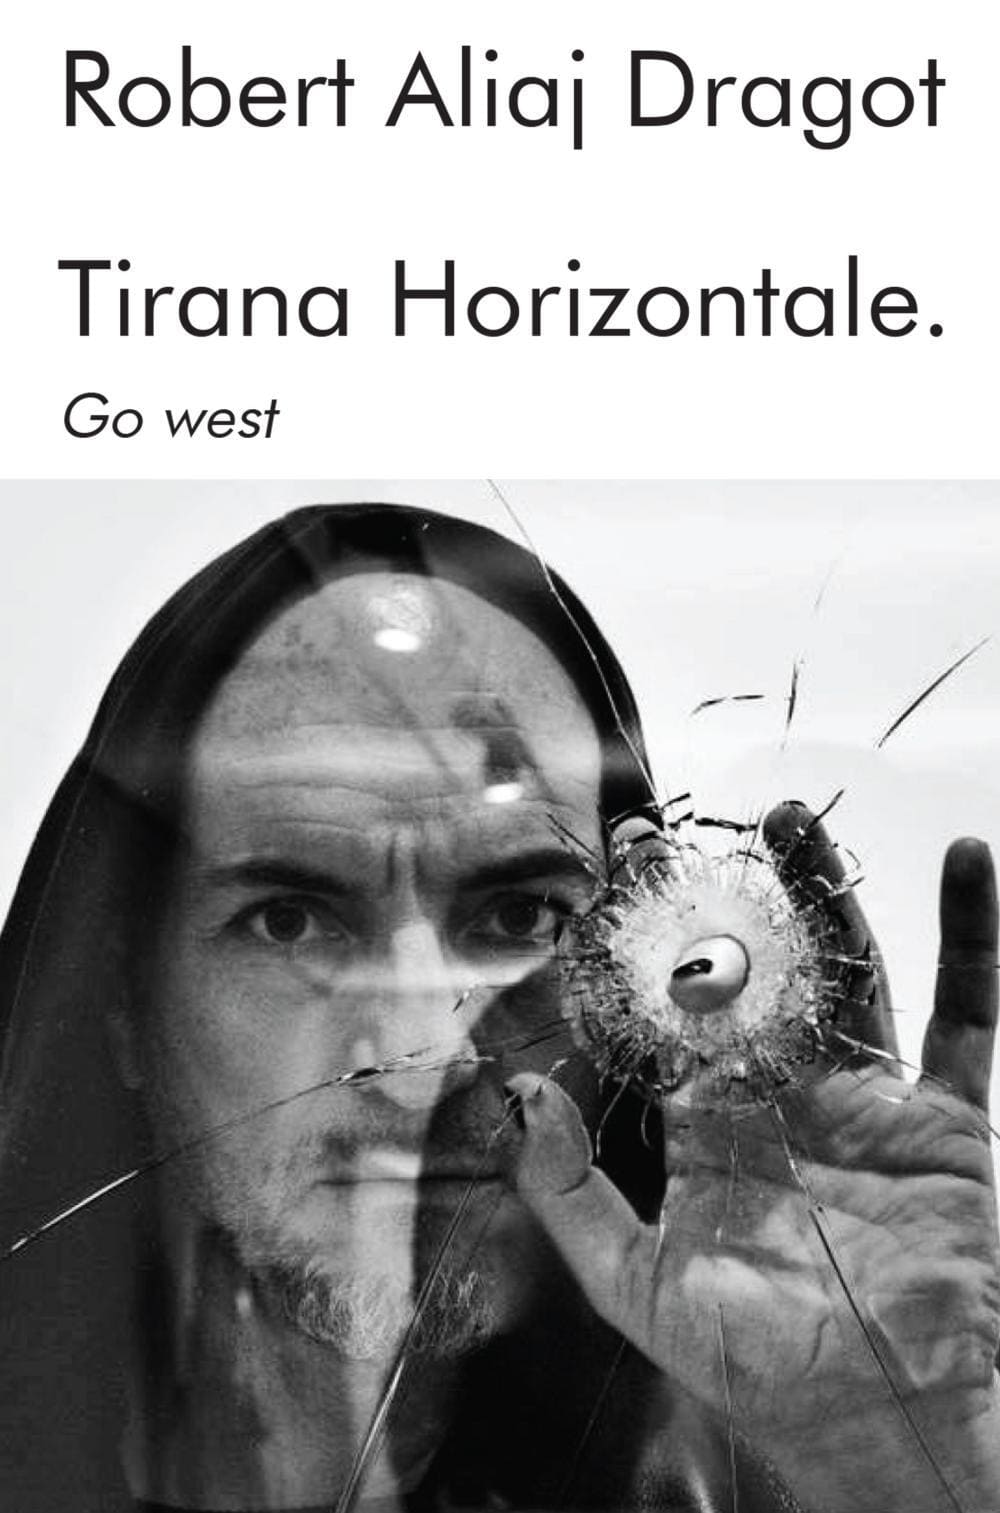 Tirana Horizontale "Go west"